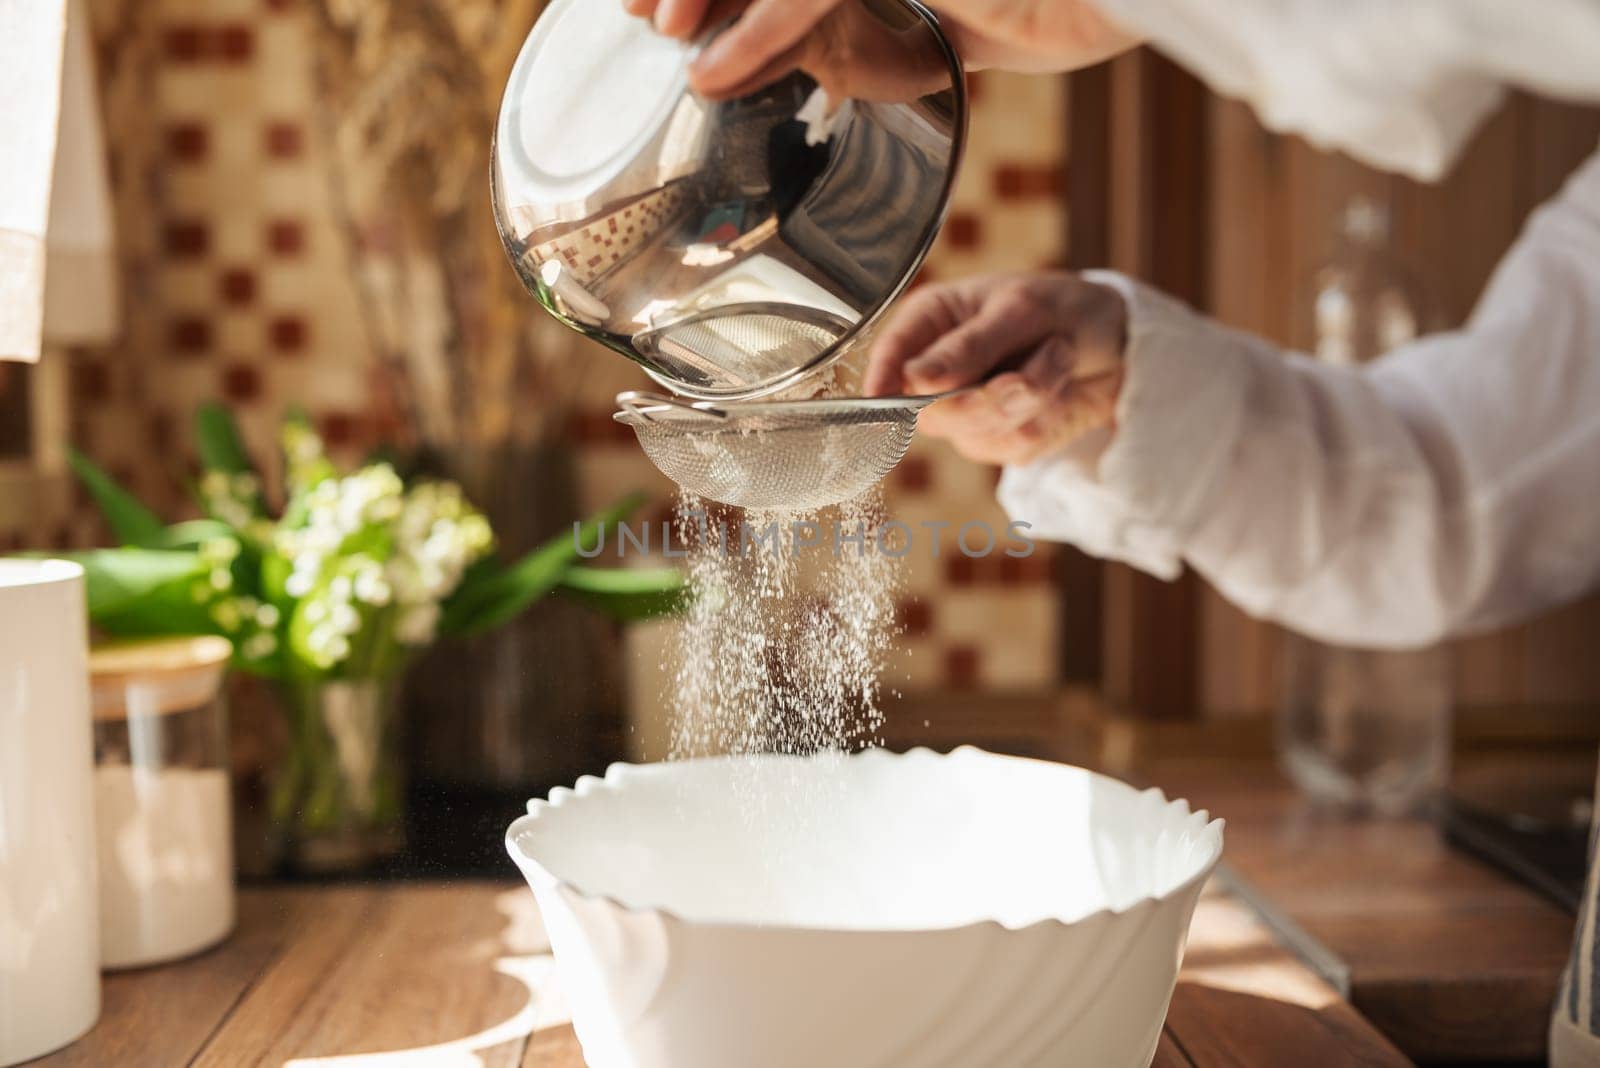 Woman sieving flour for dough by VitaliiPetrushenko